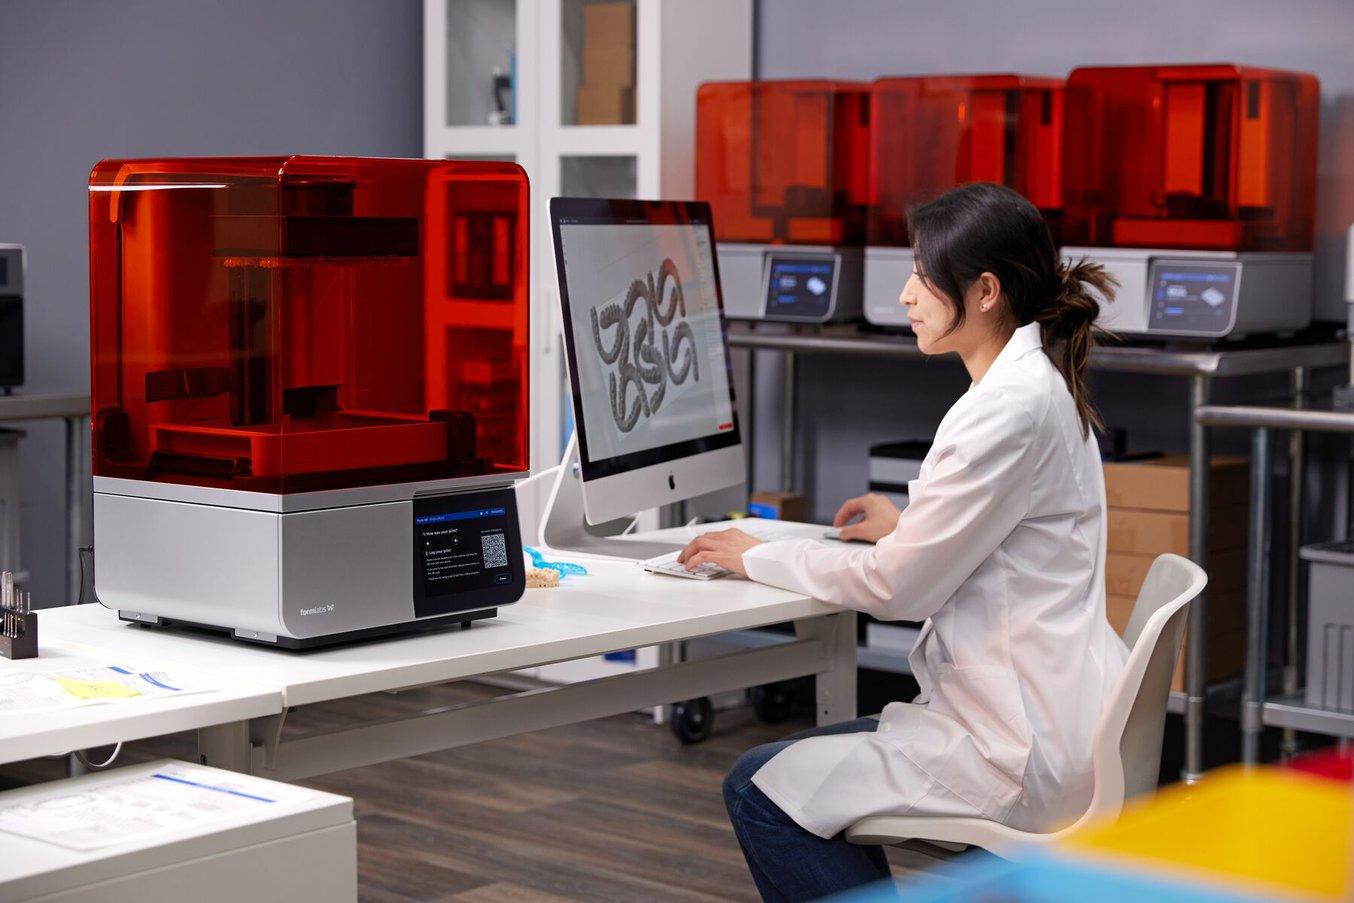 Form 4 dental 3D printer in a lab setting